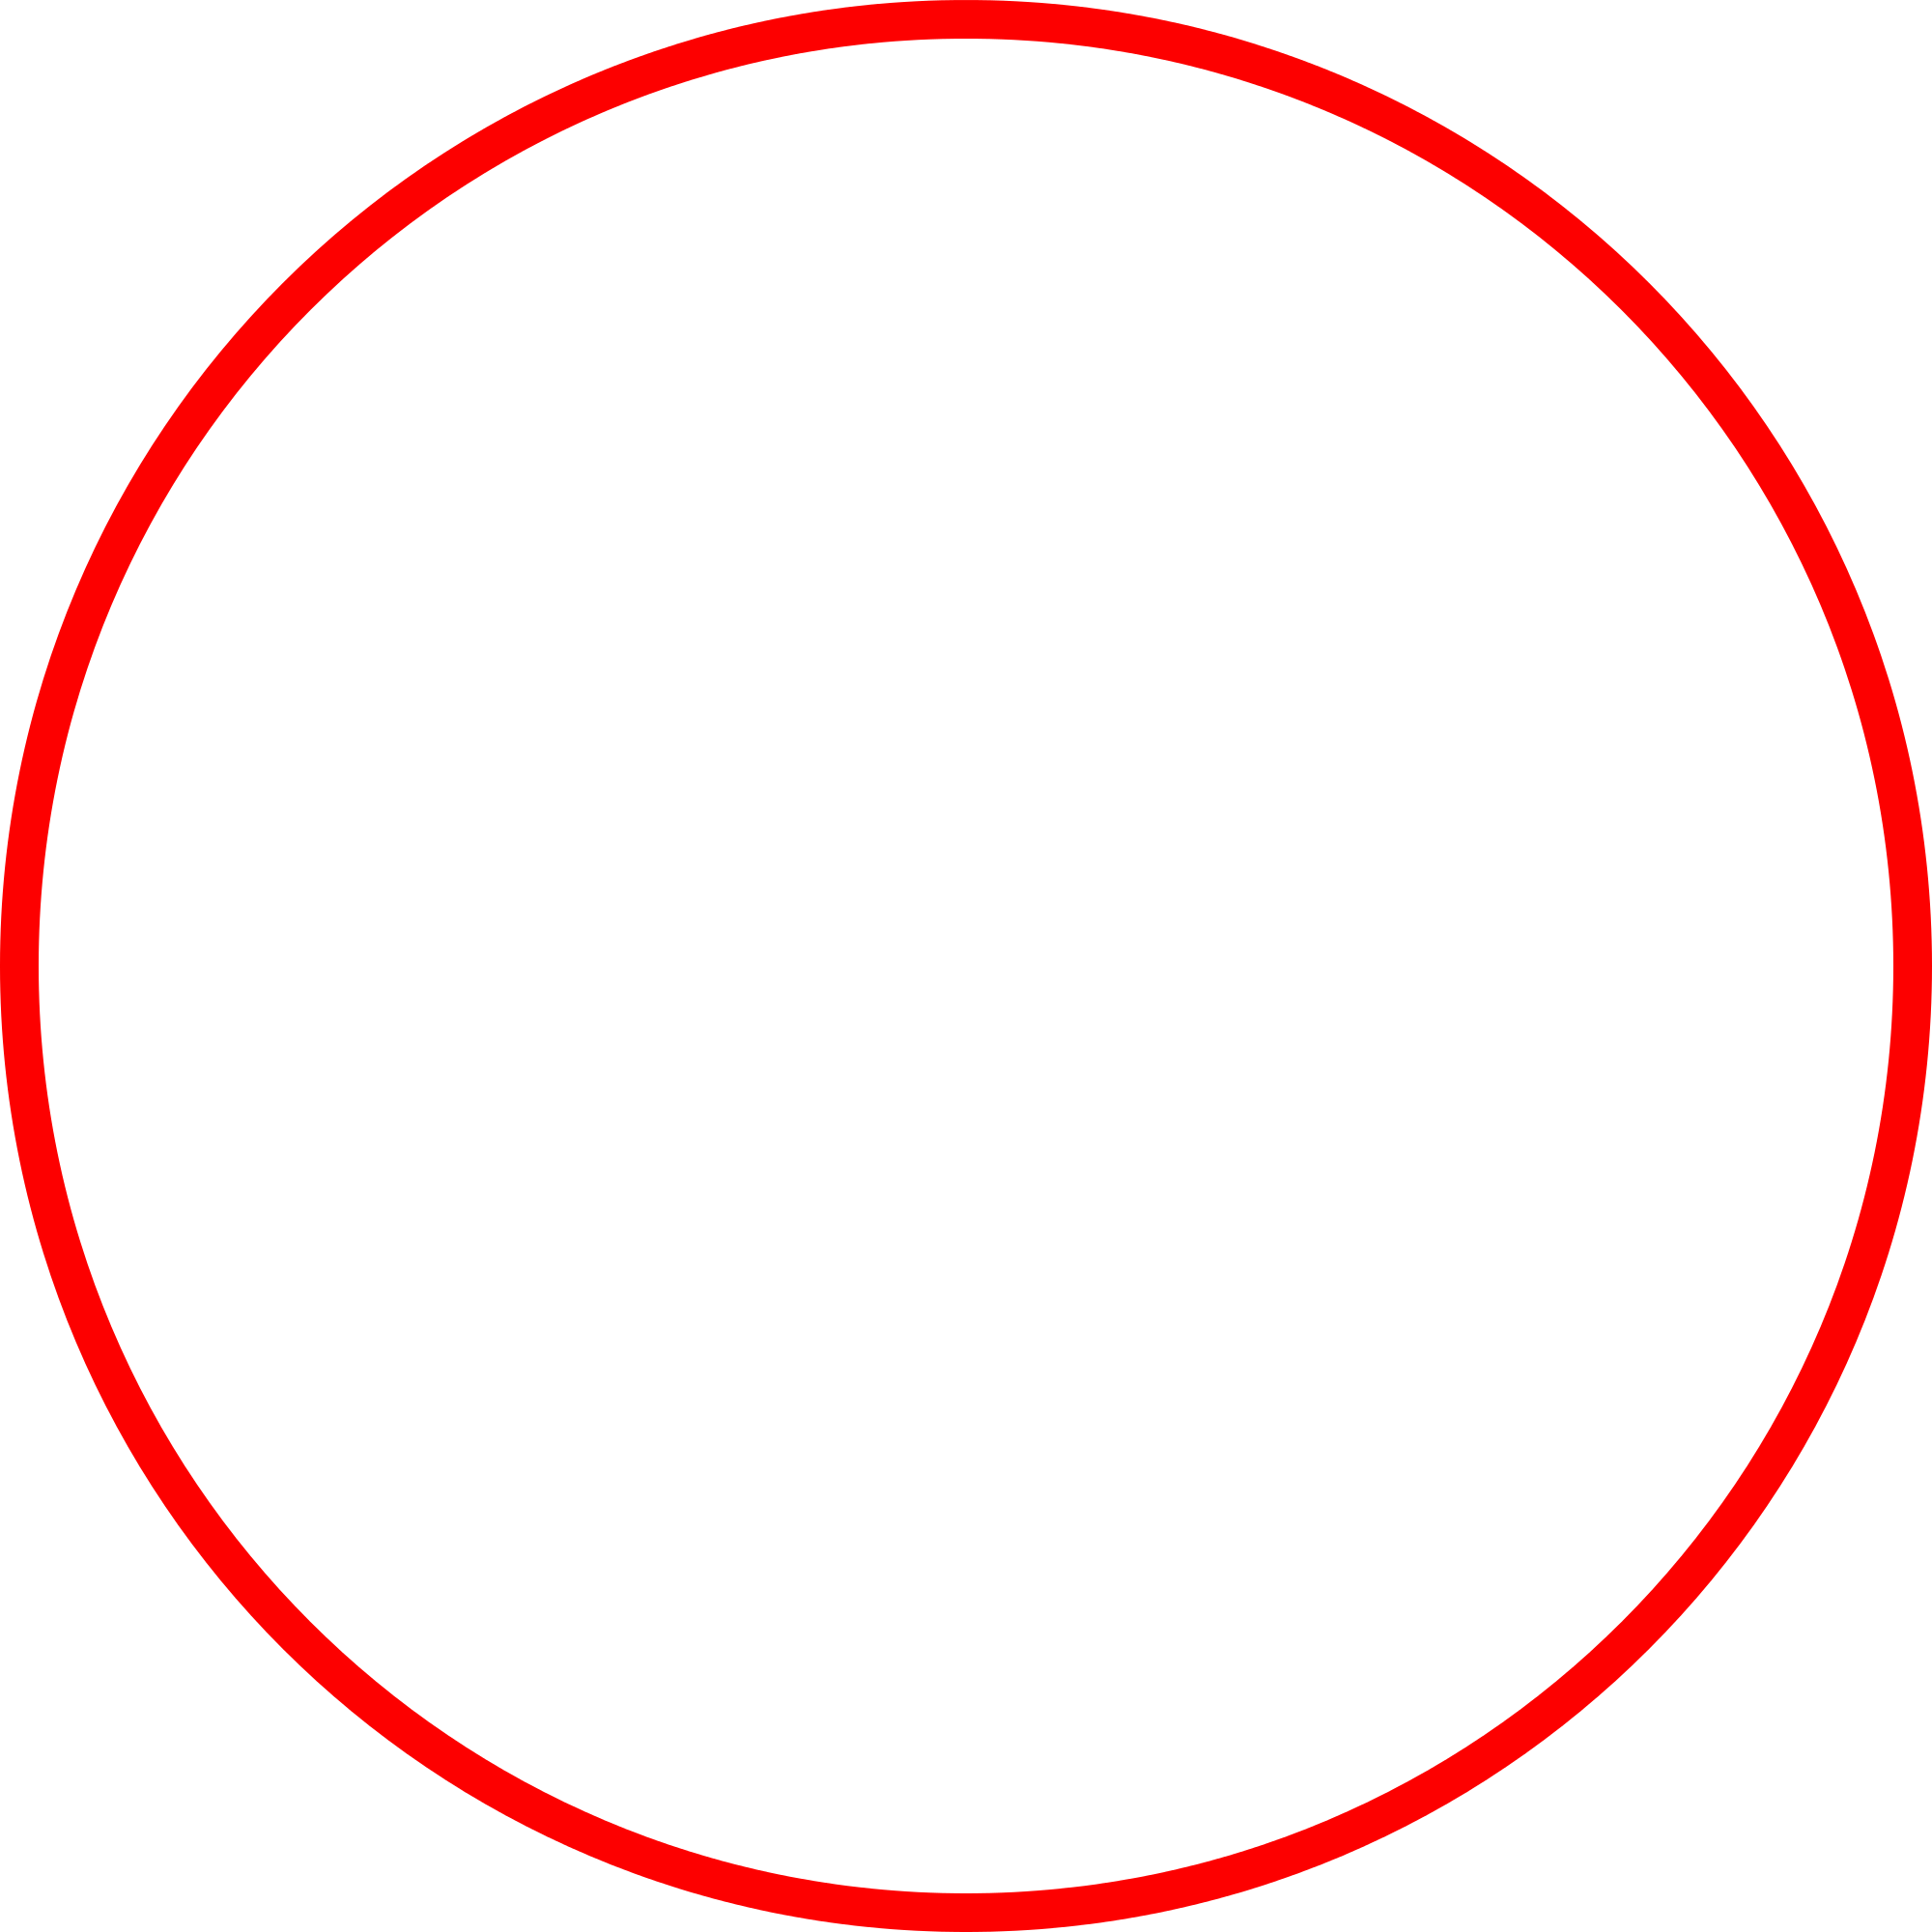 red simple download circle image 41661